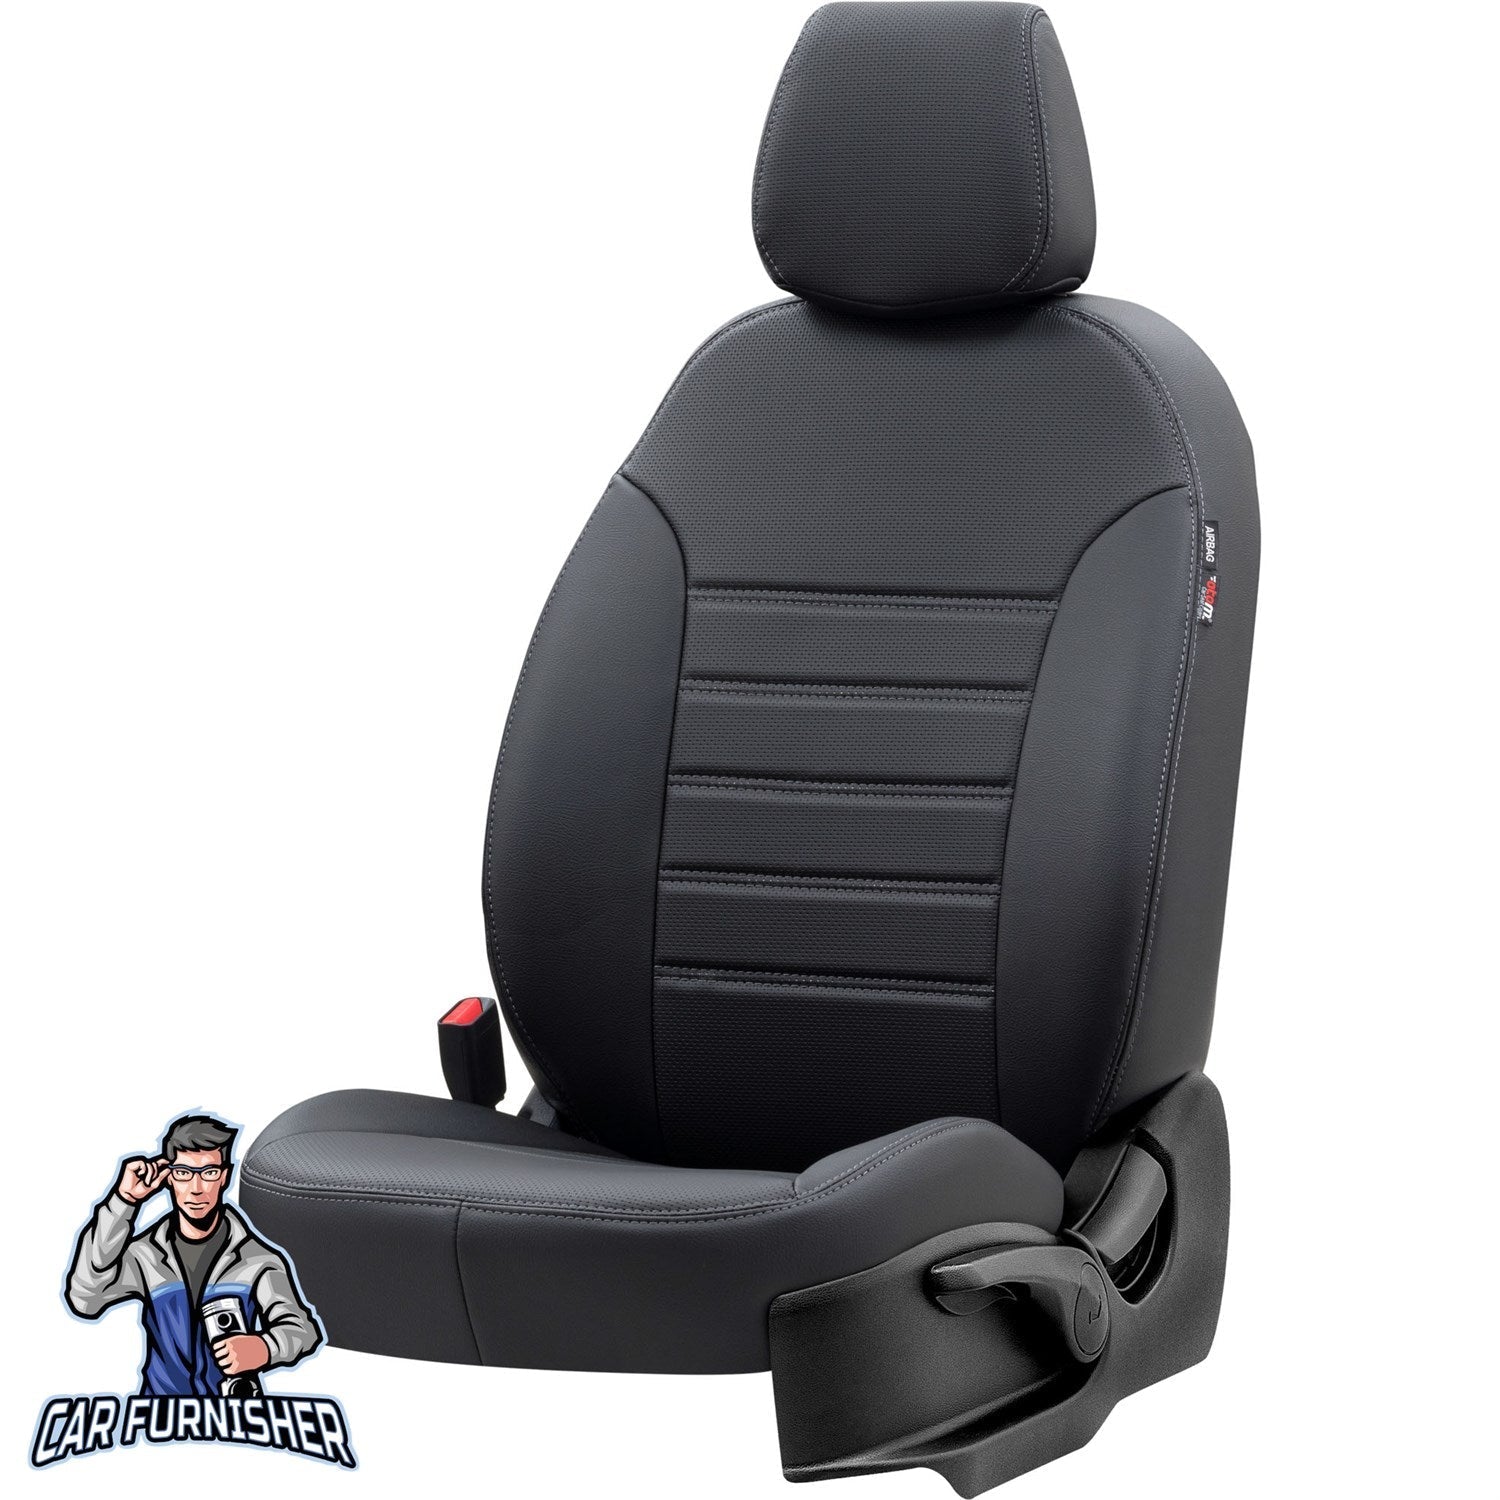 Bmw X6 Car Seat Cover 2008-2014 E71 Custom New York Design Black Full Set (5 Seats + Handrest) Leather & Fabric